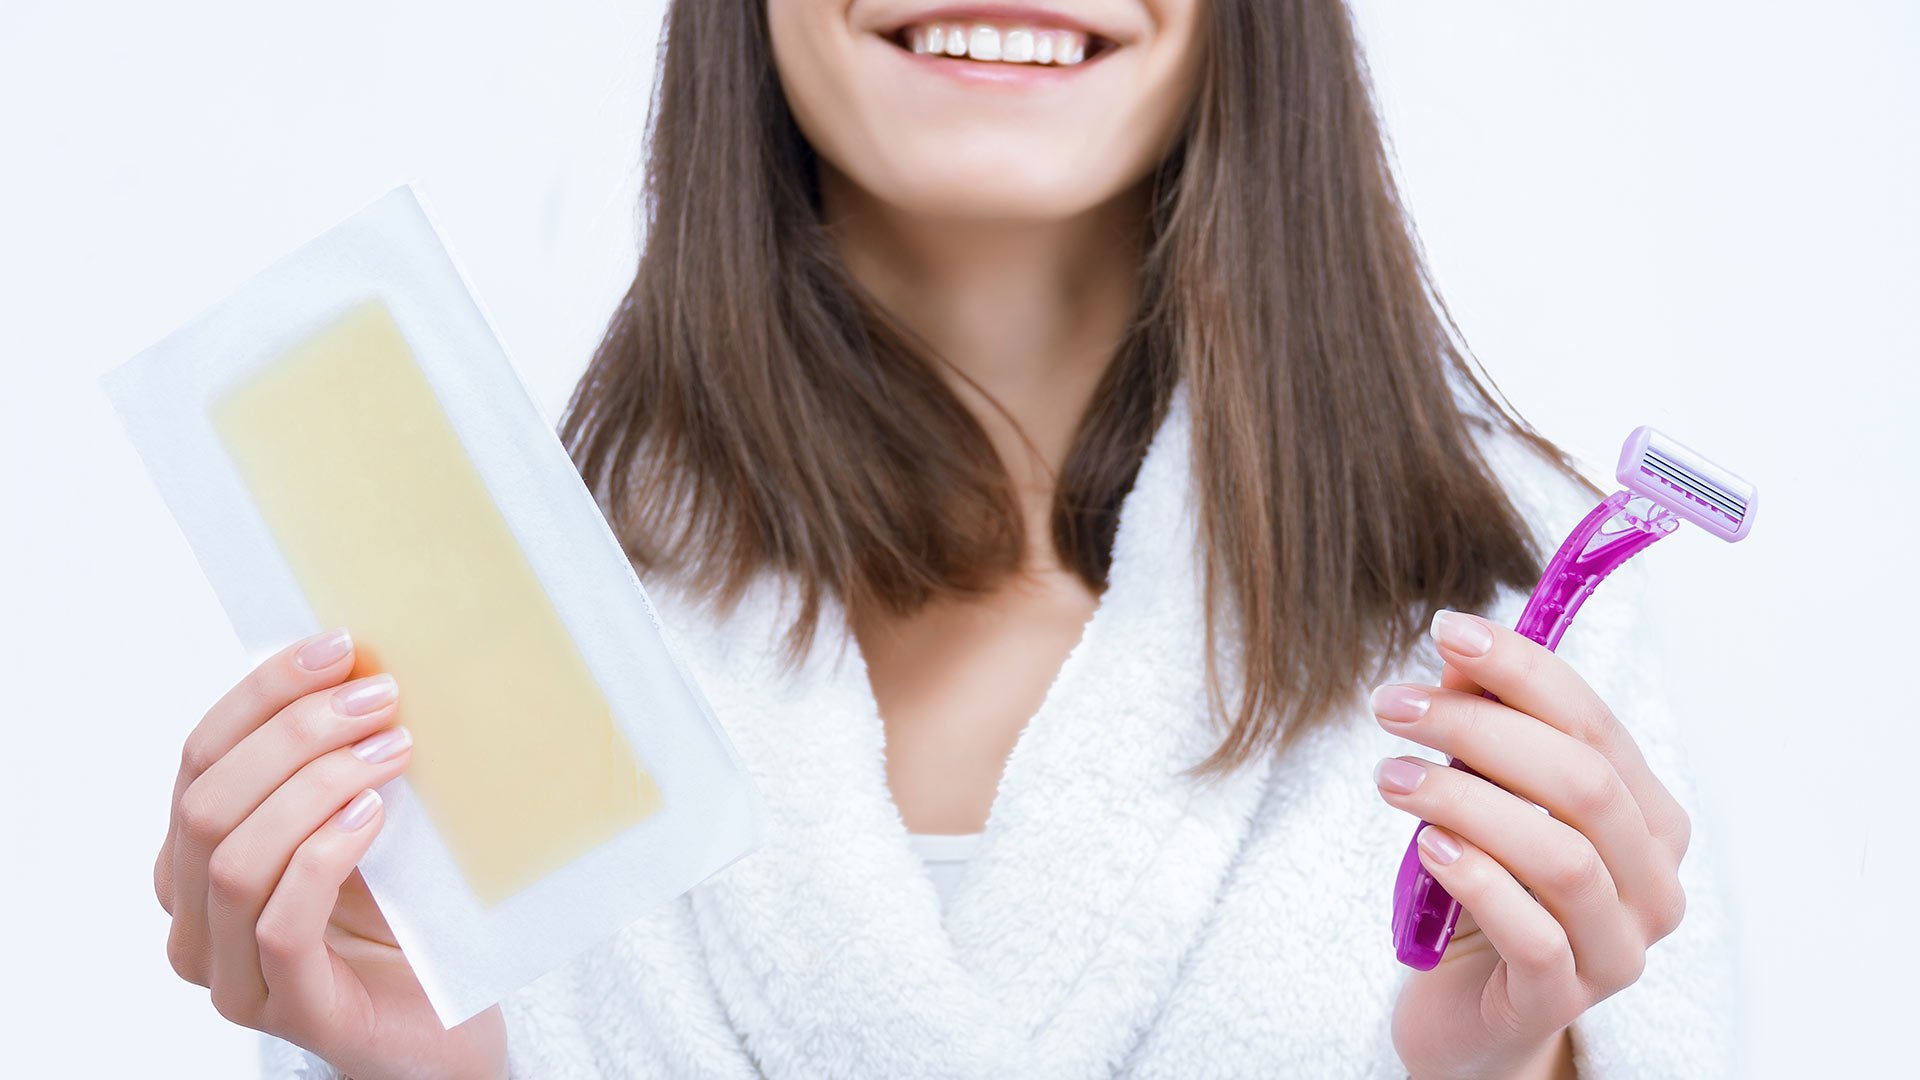 Loreal Paris Article Bikini Line Hair Removal Guide Shaving Waxing Laser D